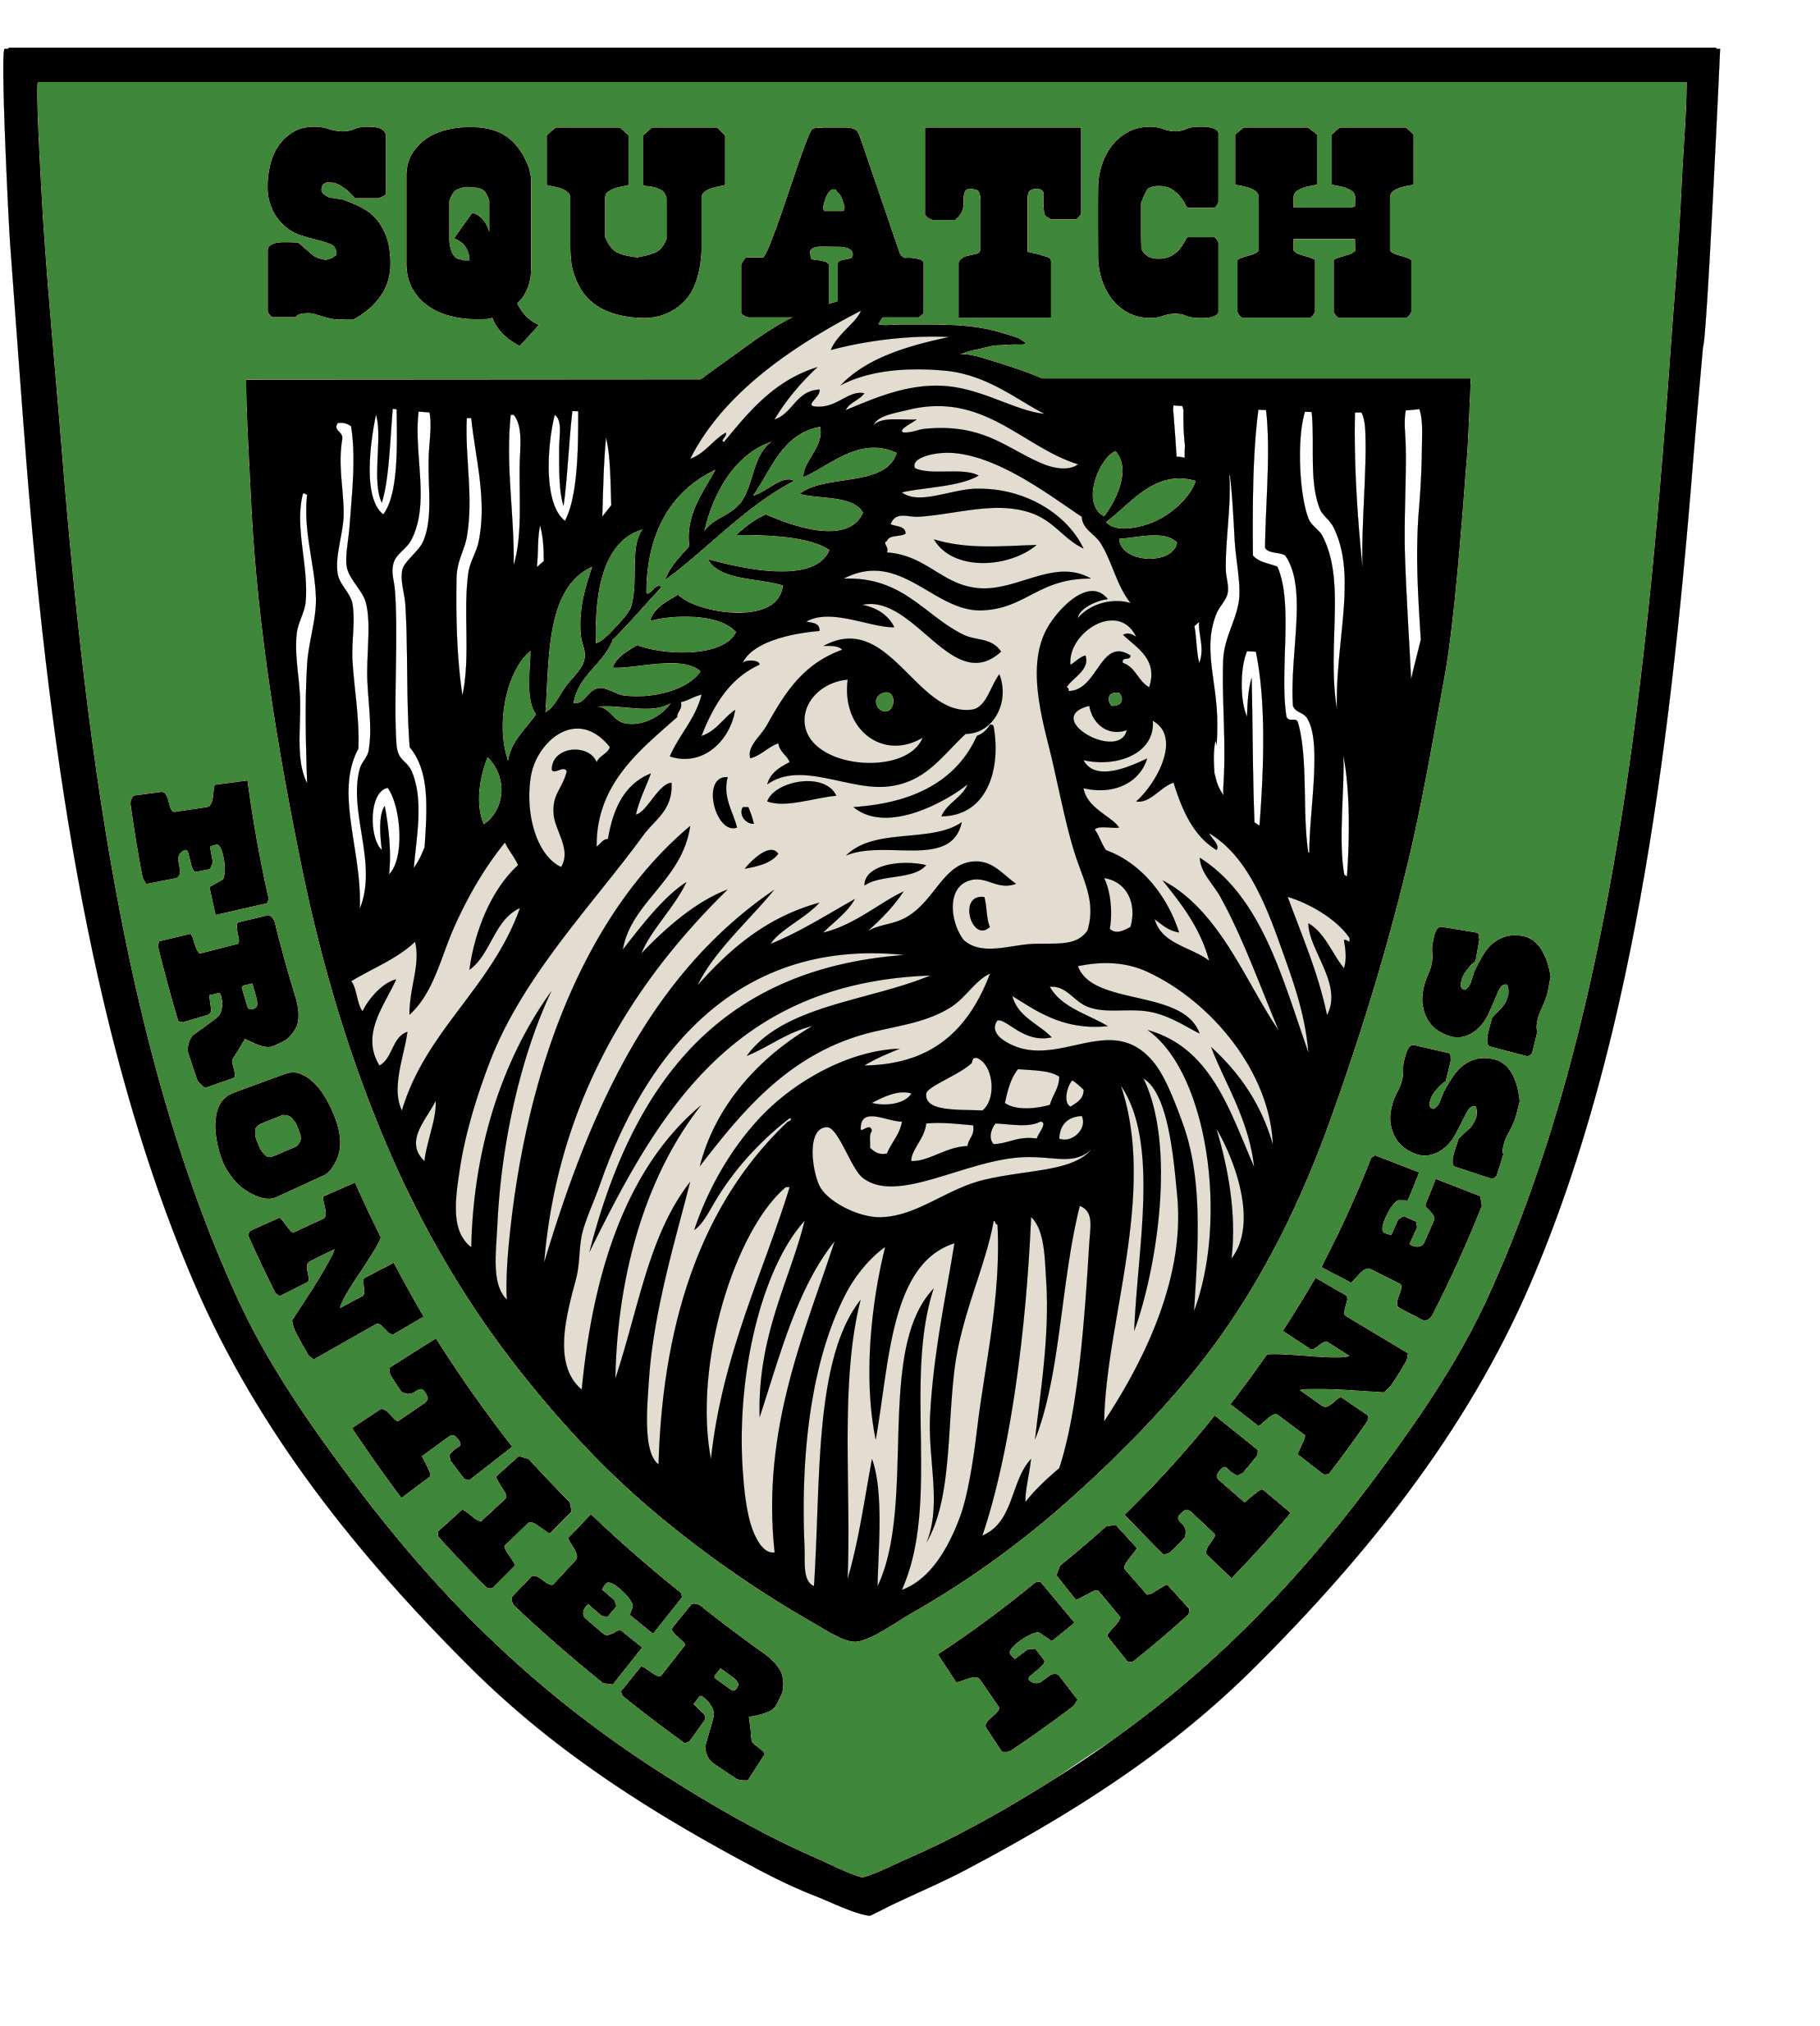 Squatchamo’s Newsletter